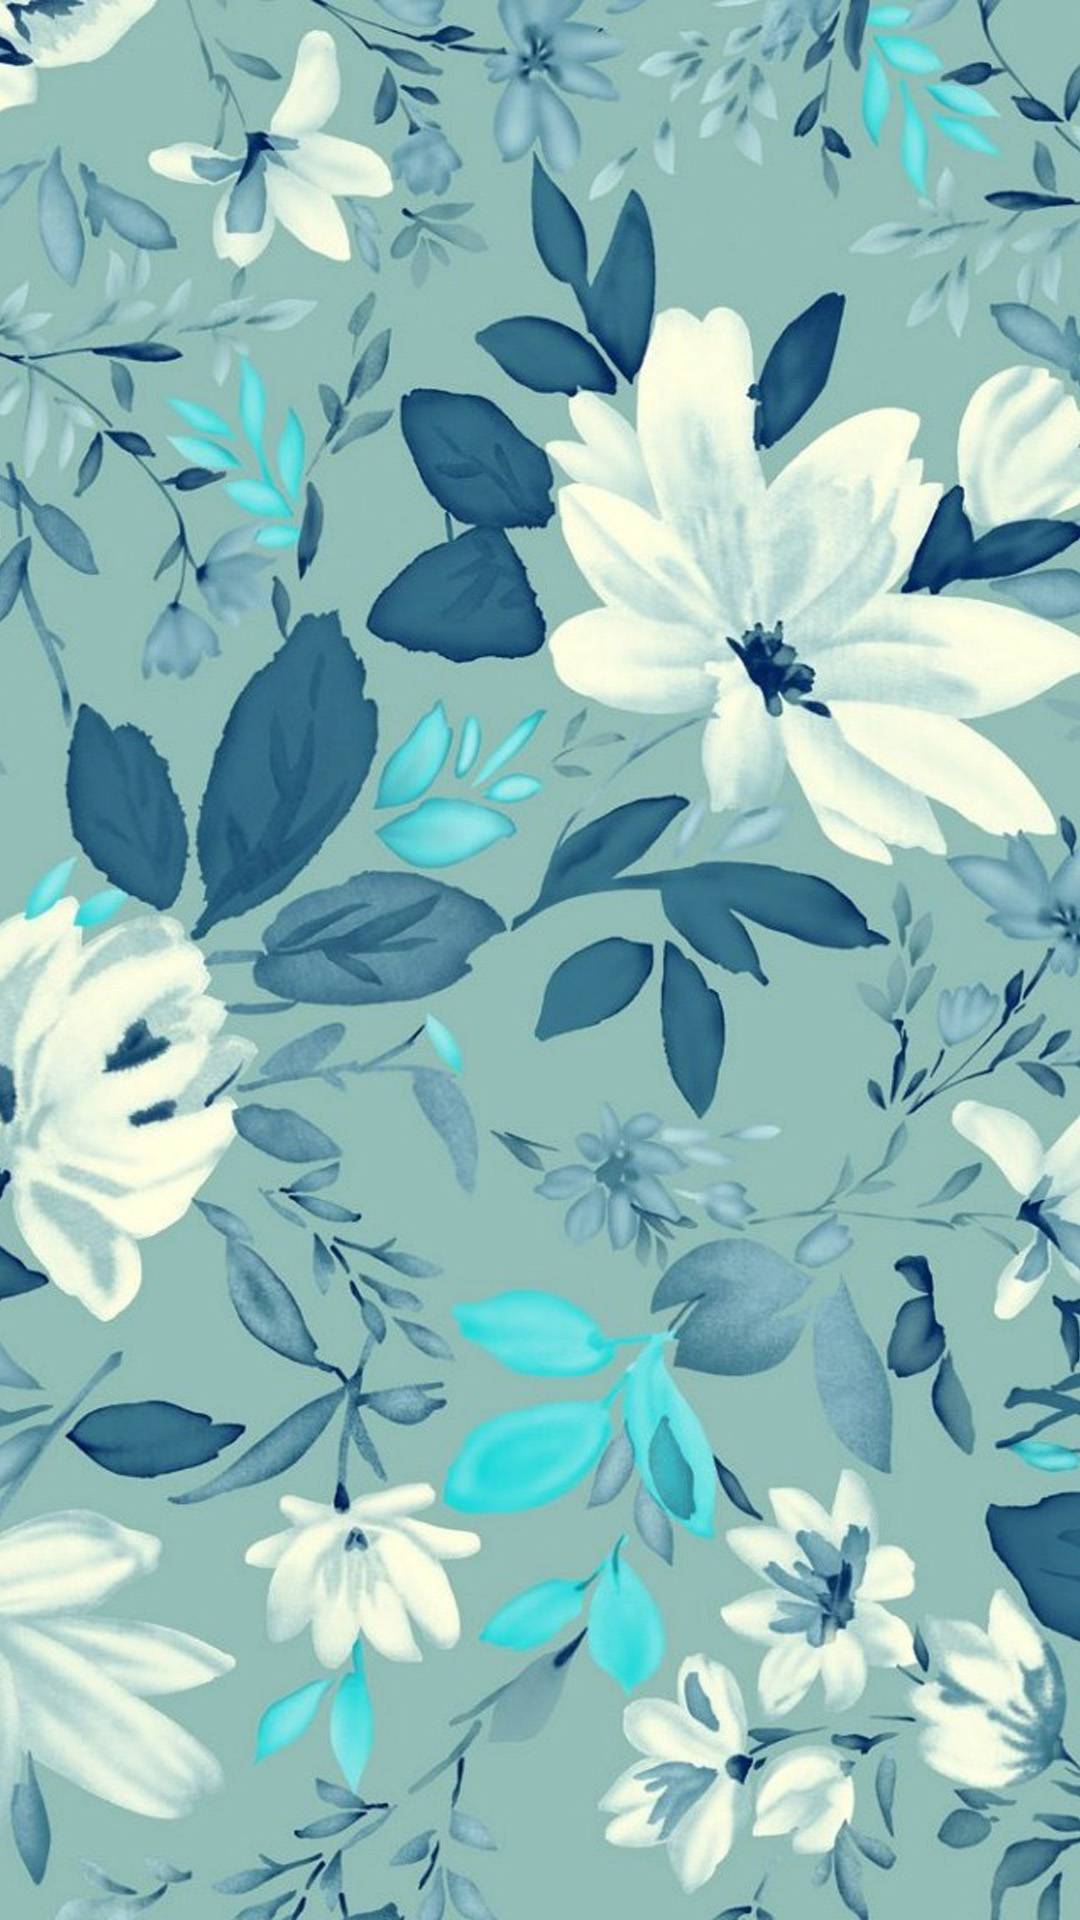 beste samsung wallpaper,blau,aqua,muster,türkis,blaugrün